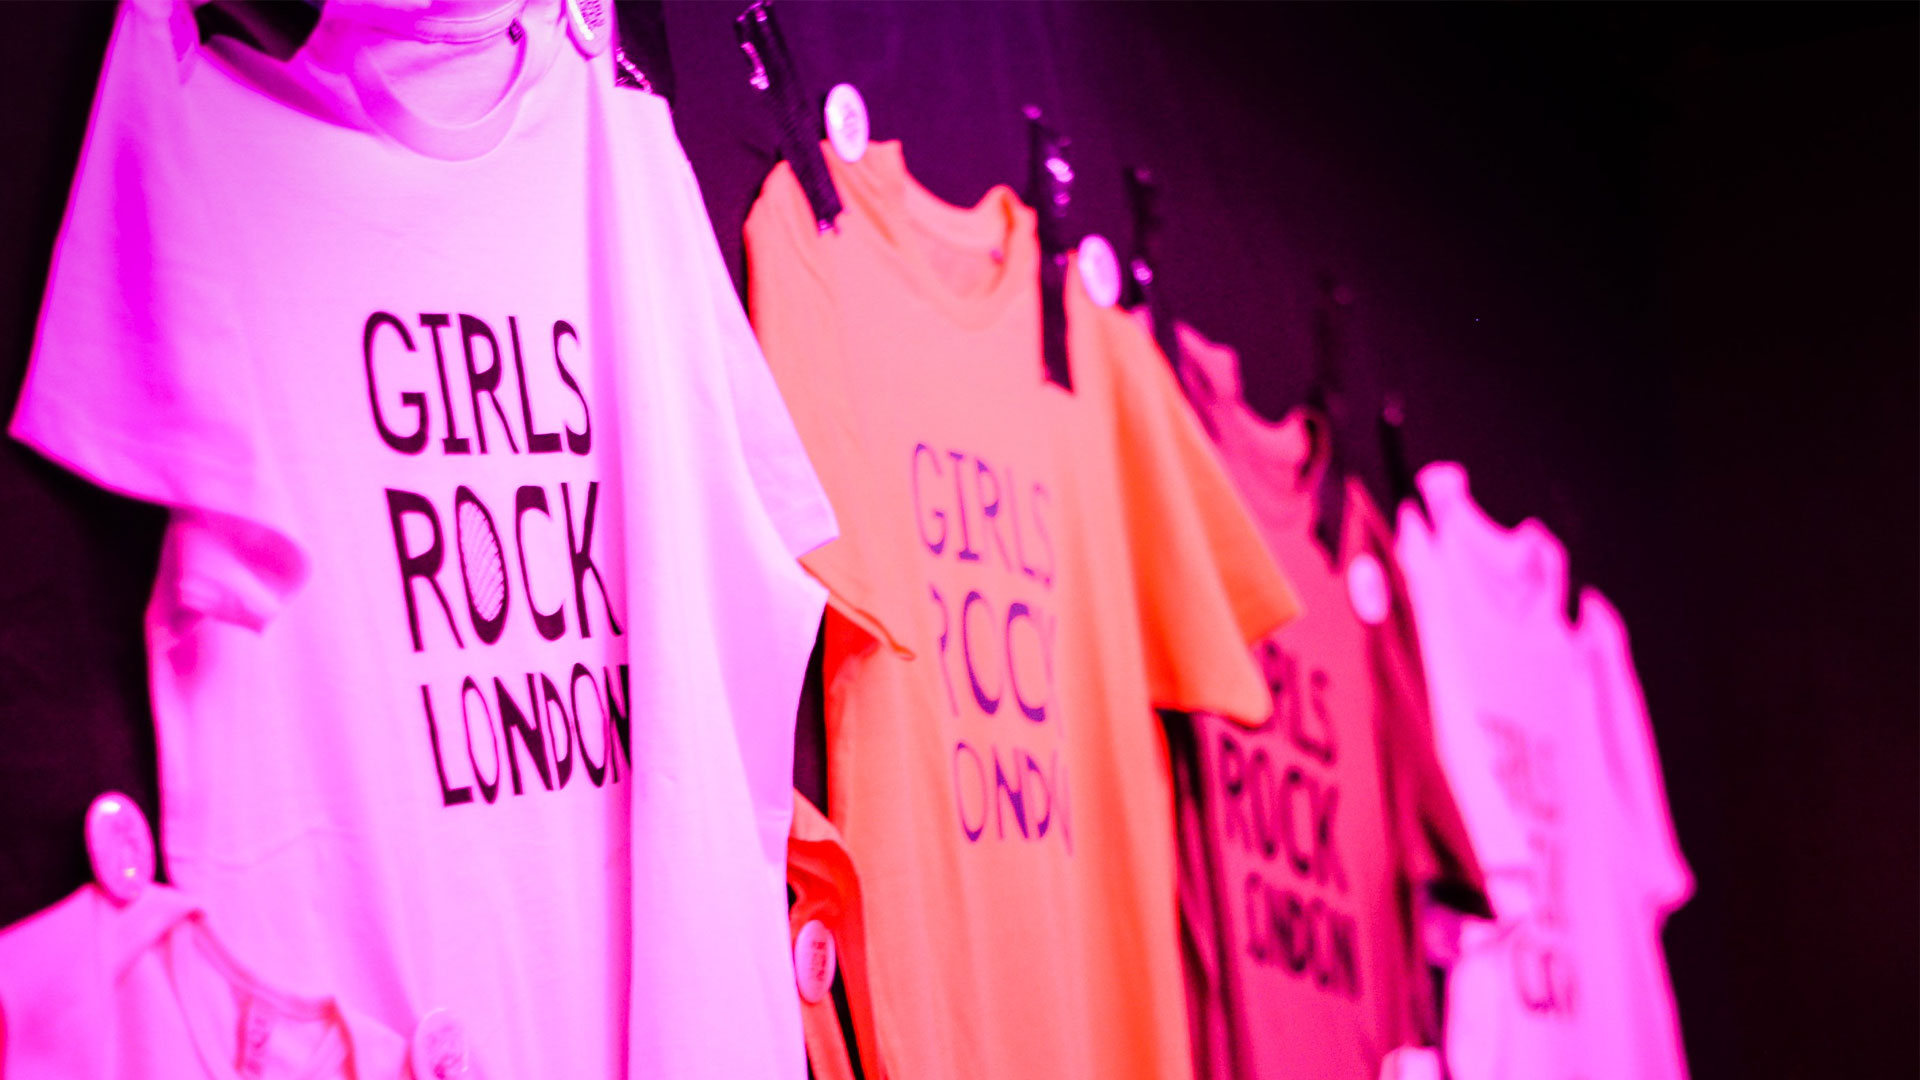 Girls Rock London